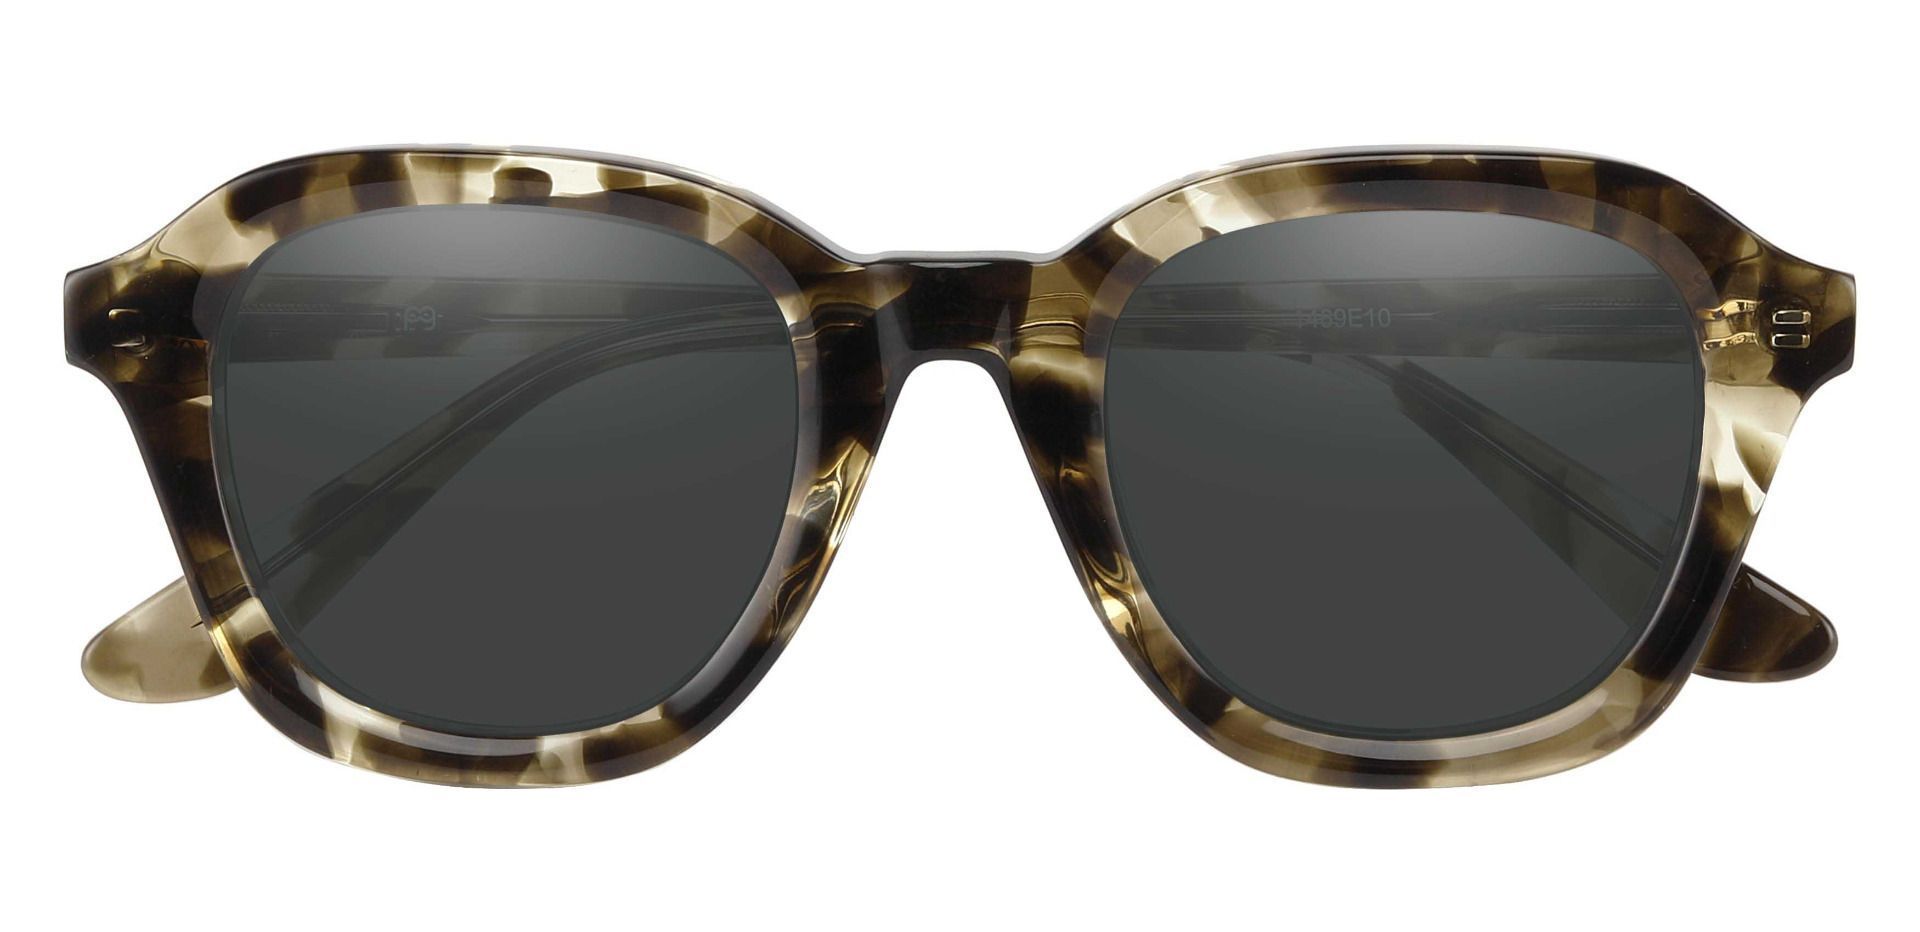 Grove Square Progressive Sunglasses - Green Frame With Gray Lenses